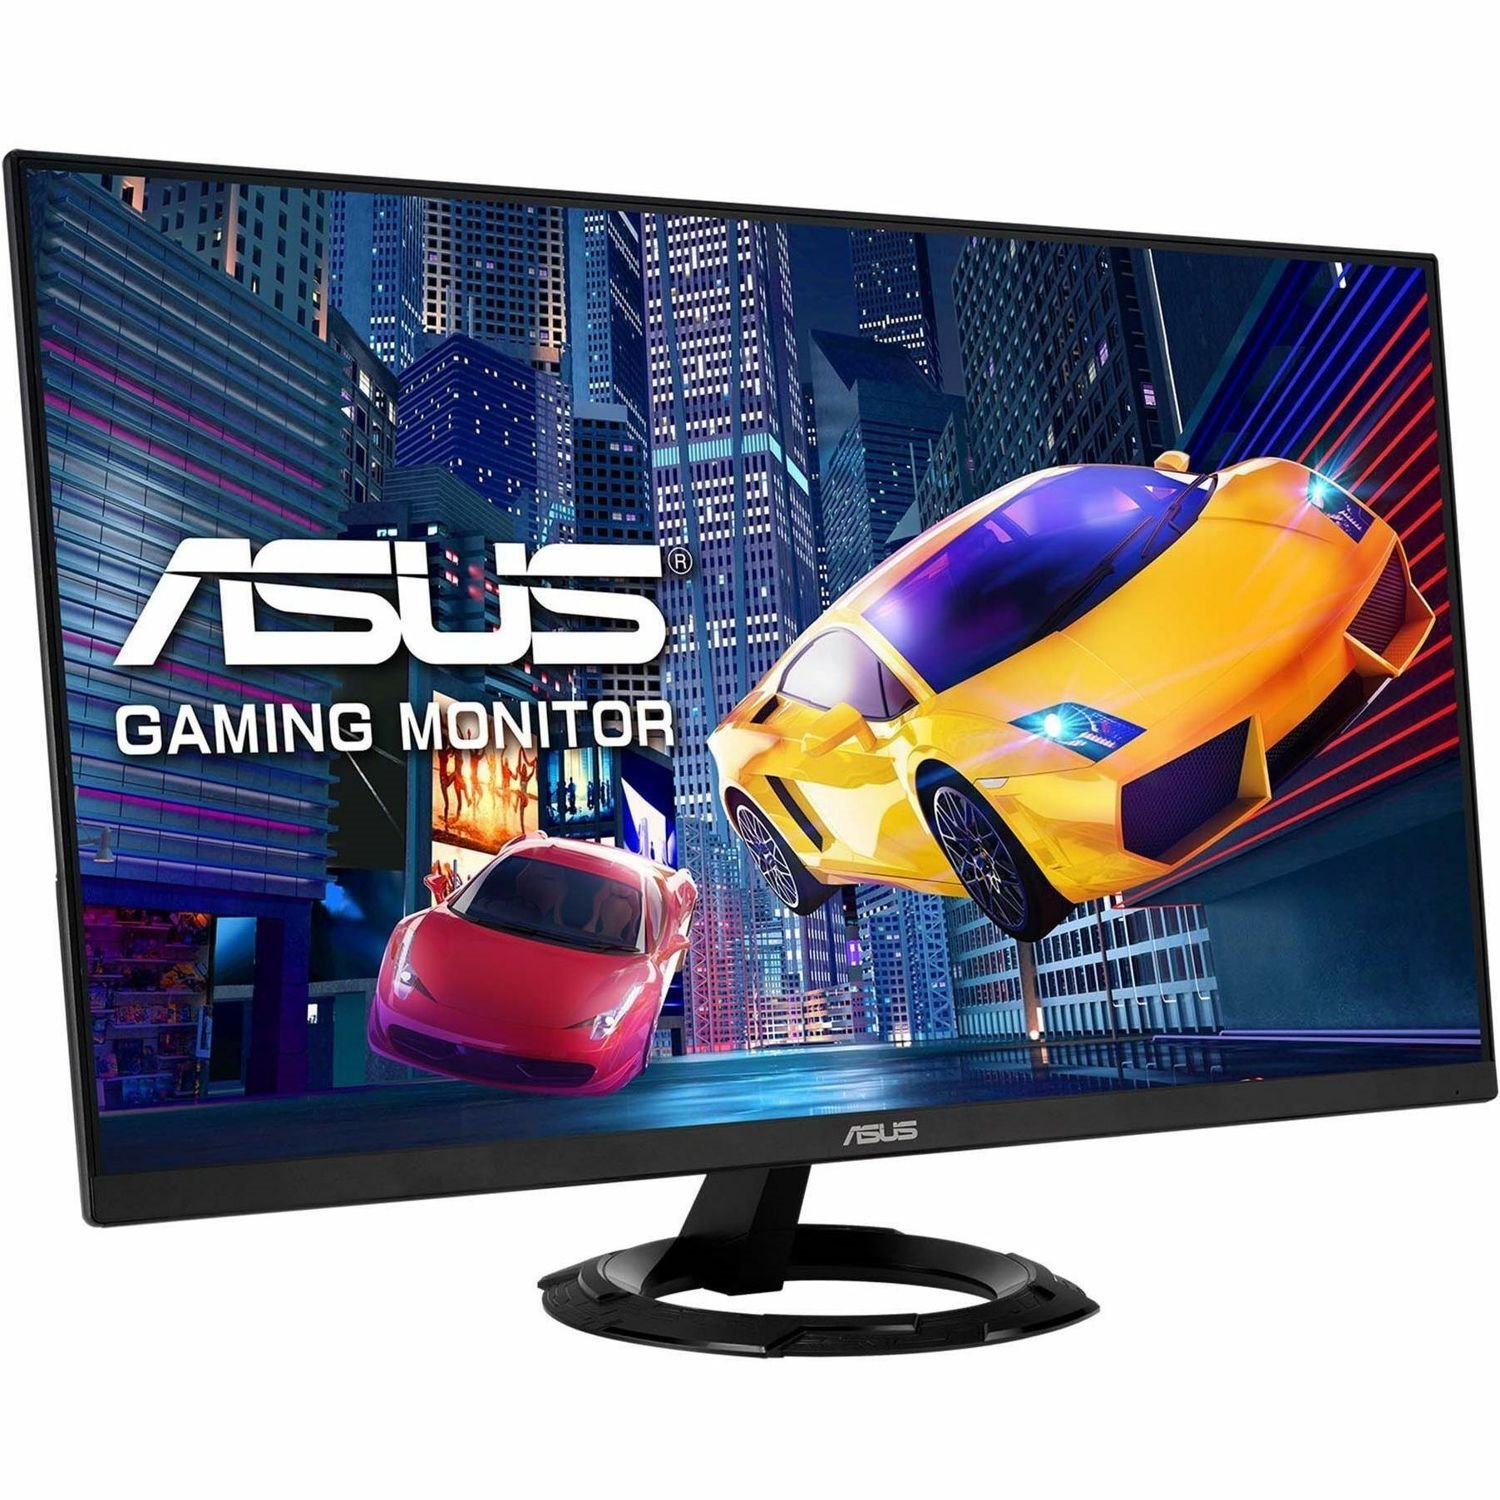 Asus VZ279QG1R 27" Class Full HD Gaming LED Monitor - 16:9